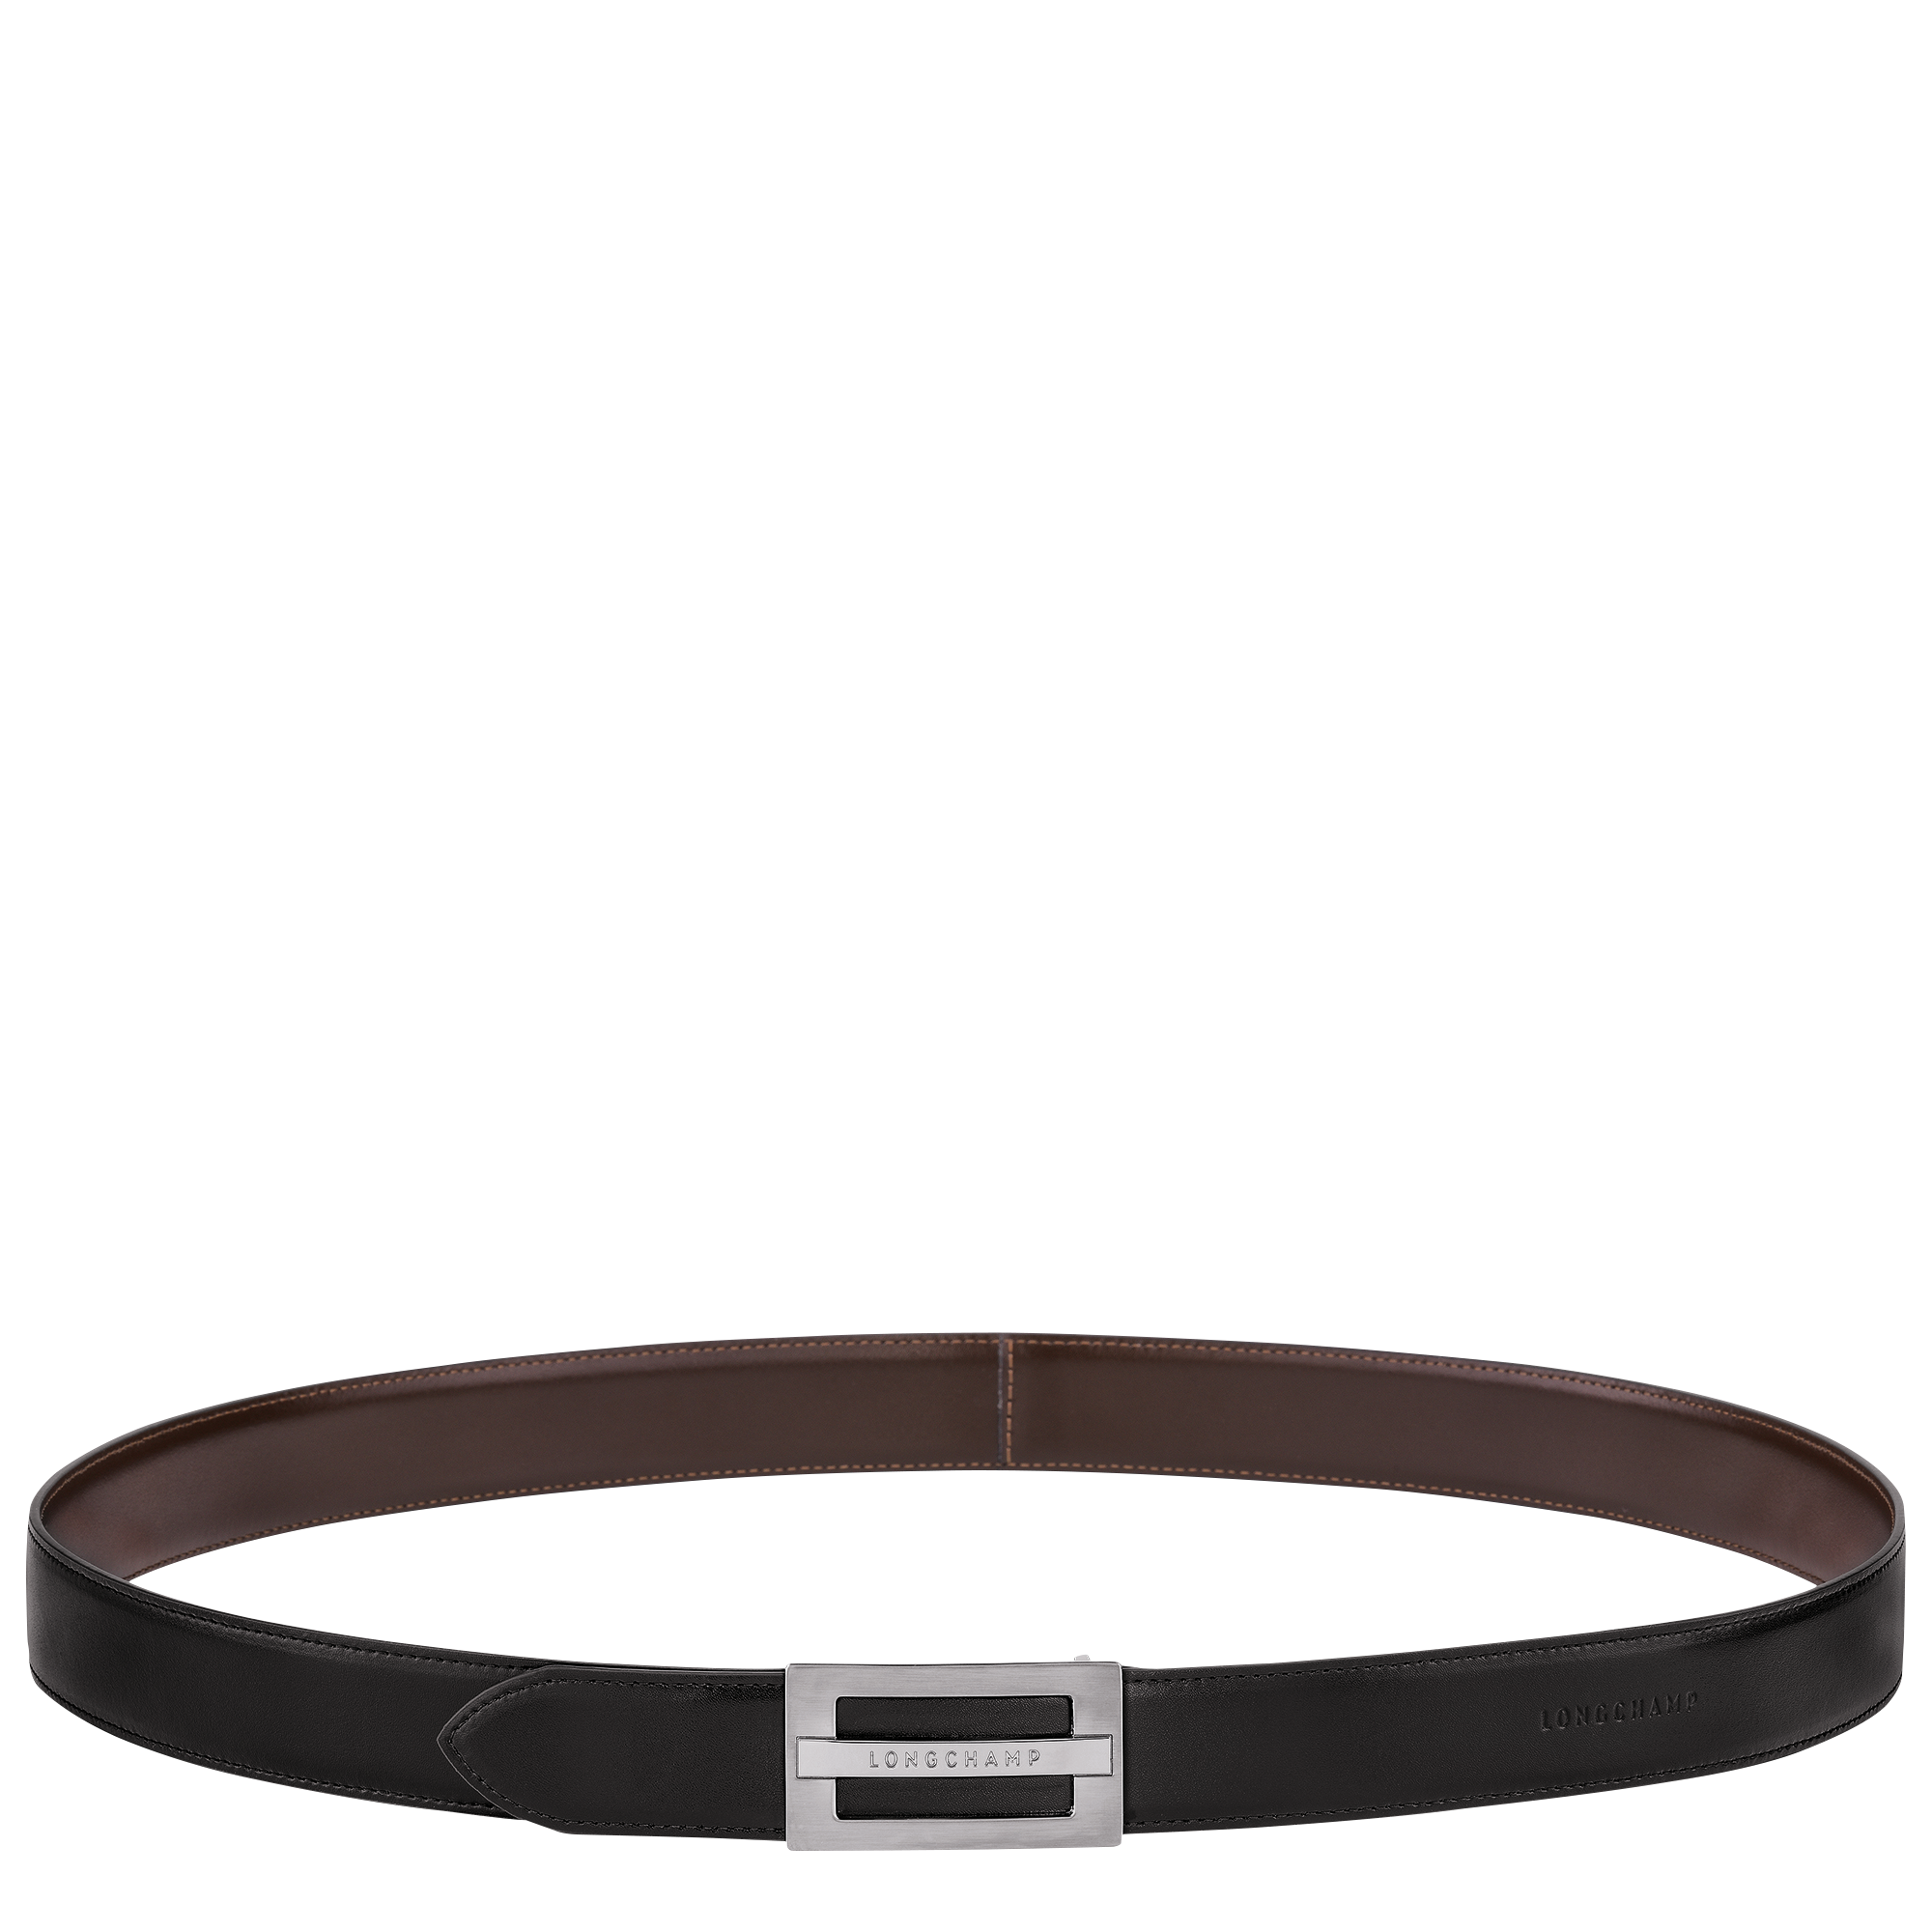 Delta Box Men's belt Black/Mocha - Leather (42031022093) | Longchamp US